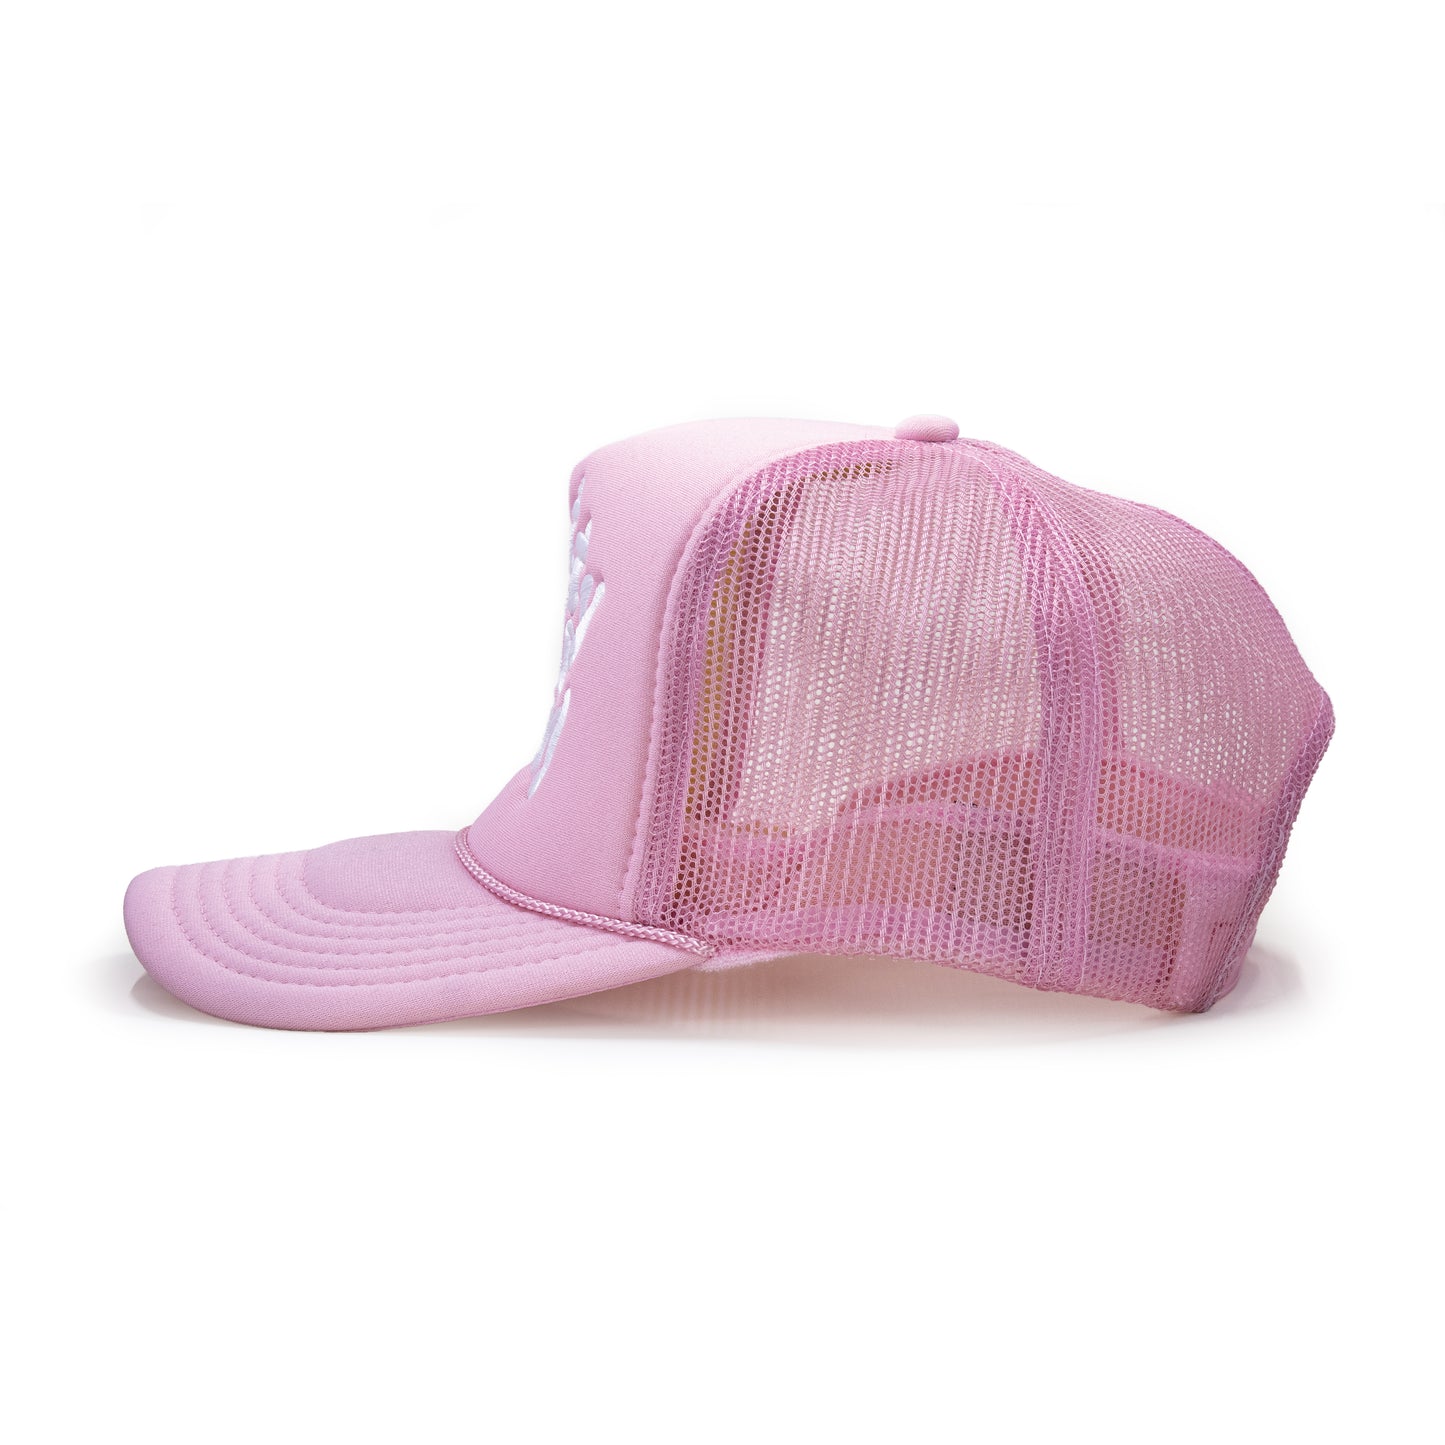 Pretty Girls Pray Trucker Hat | Pink and White